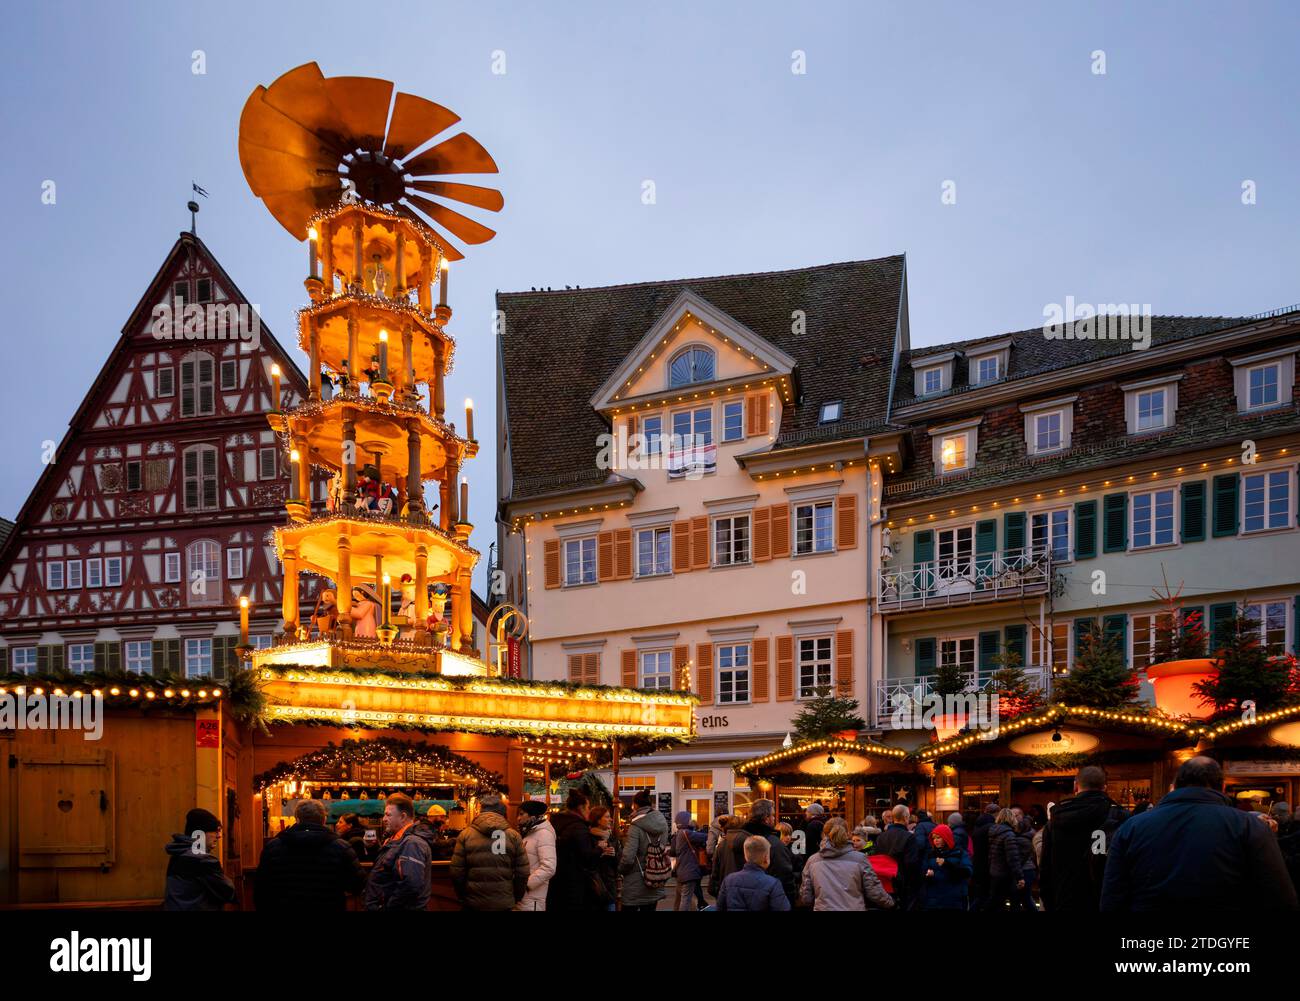 Marché de Noël, pyramide de Noël, vieille ville, Esslingen am Neckar, heure bleue, Baden-Wuerttemberg, Allemagne Banque D'Images